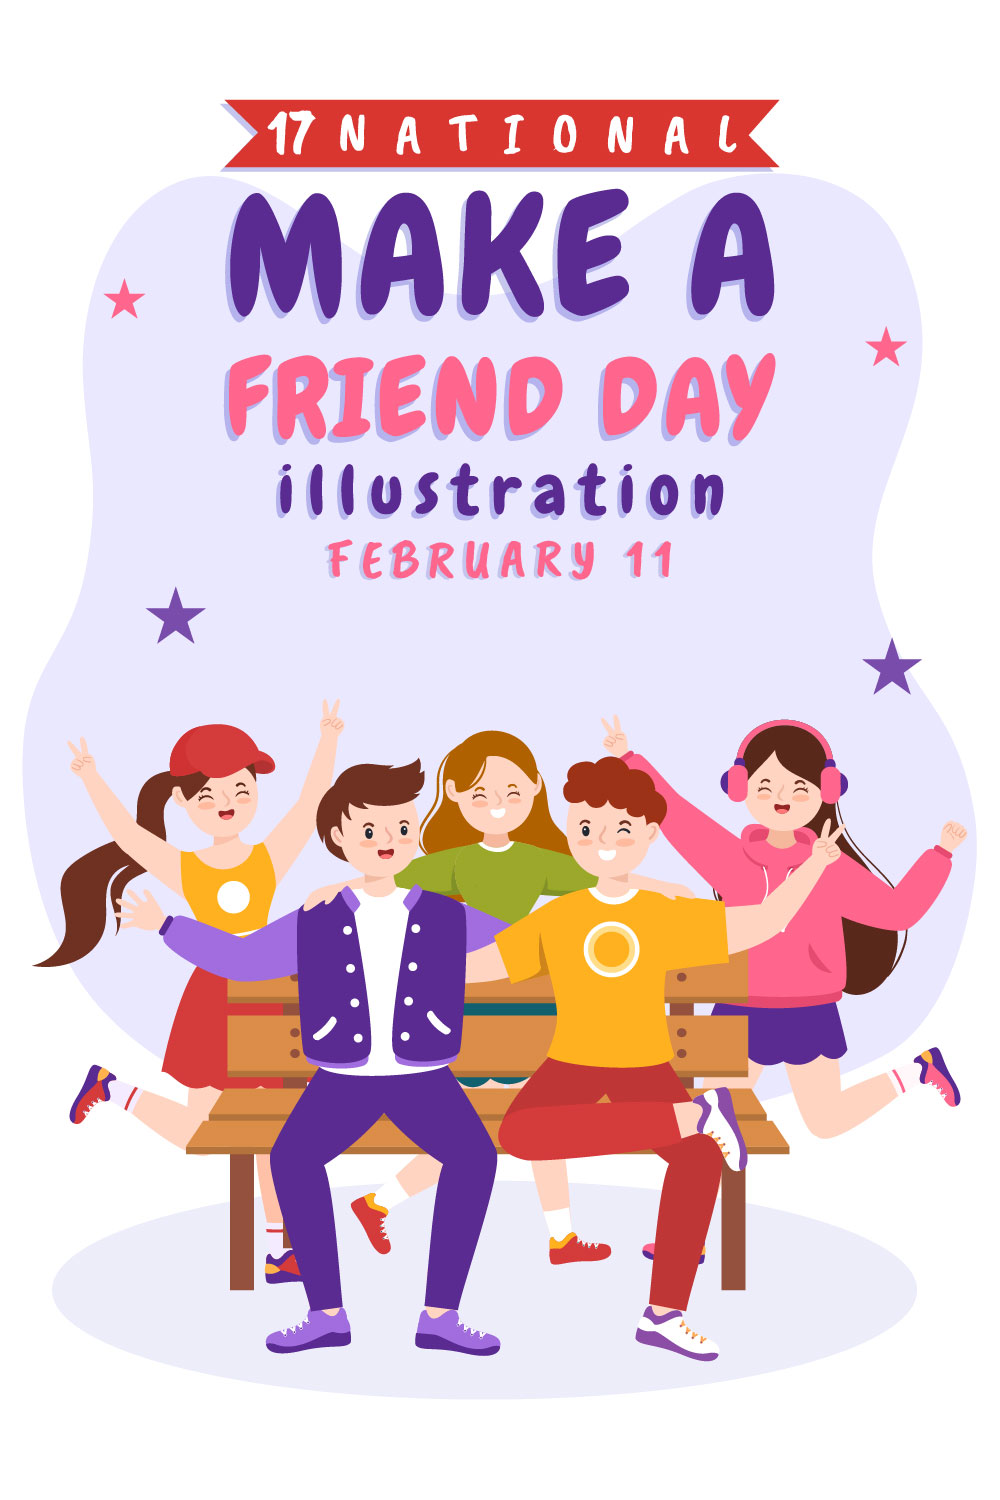 National Make a Friend Day Illustration pinterest image.